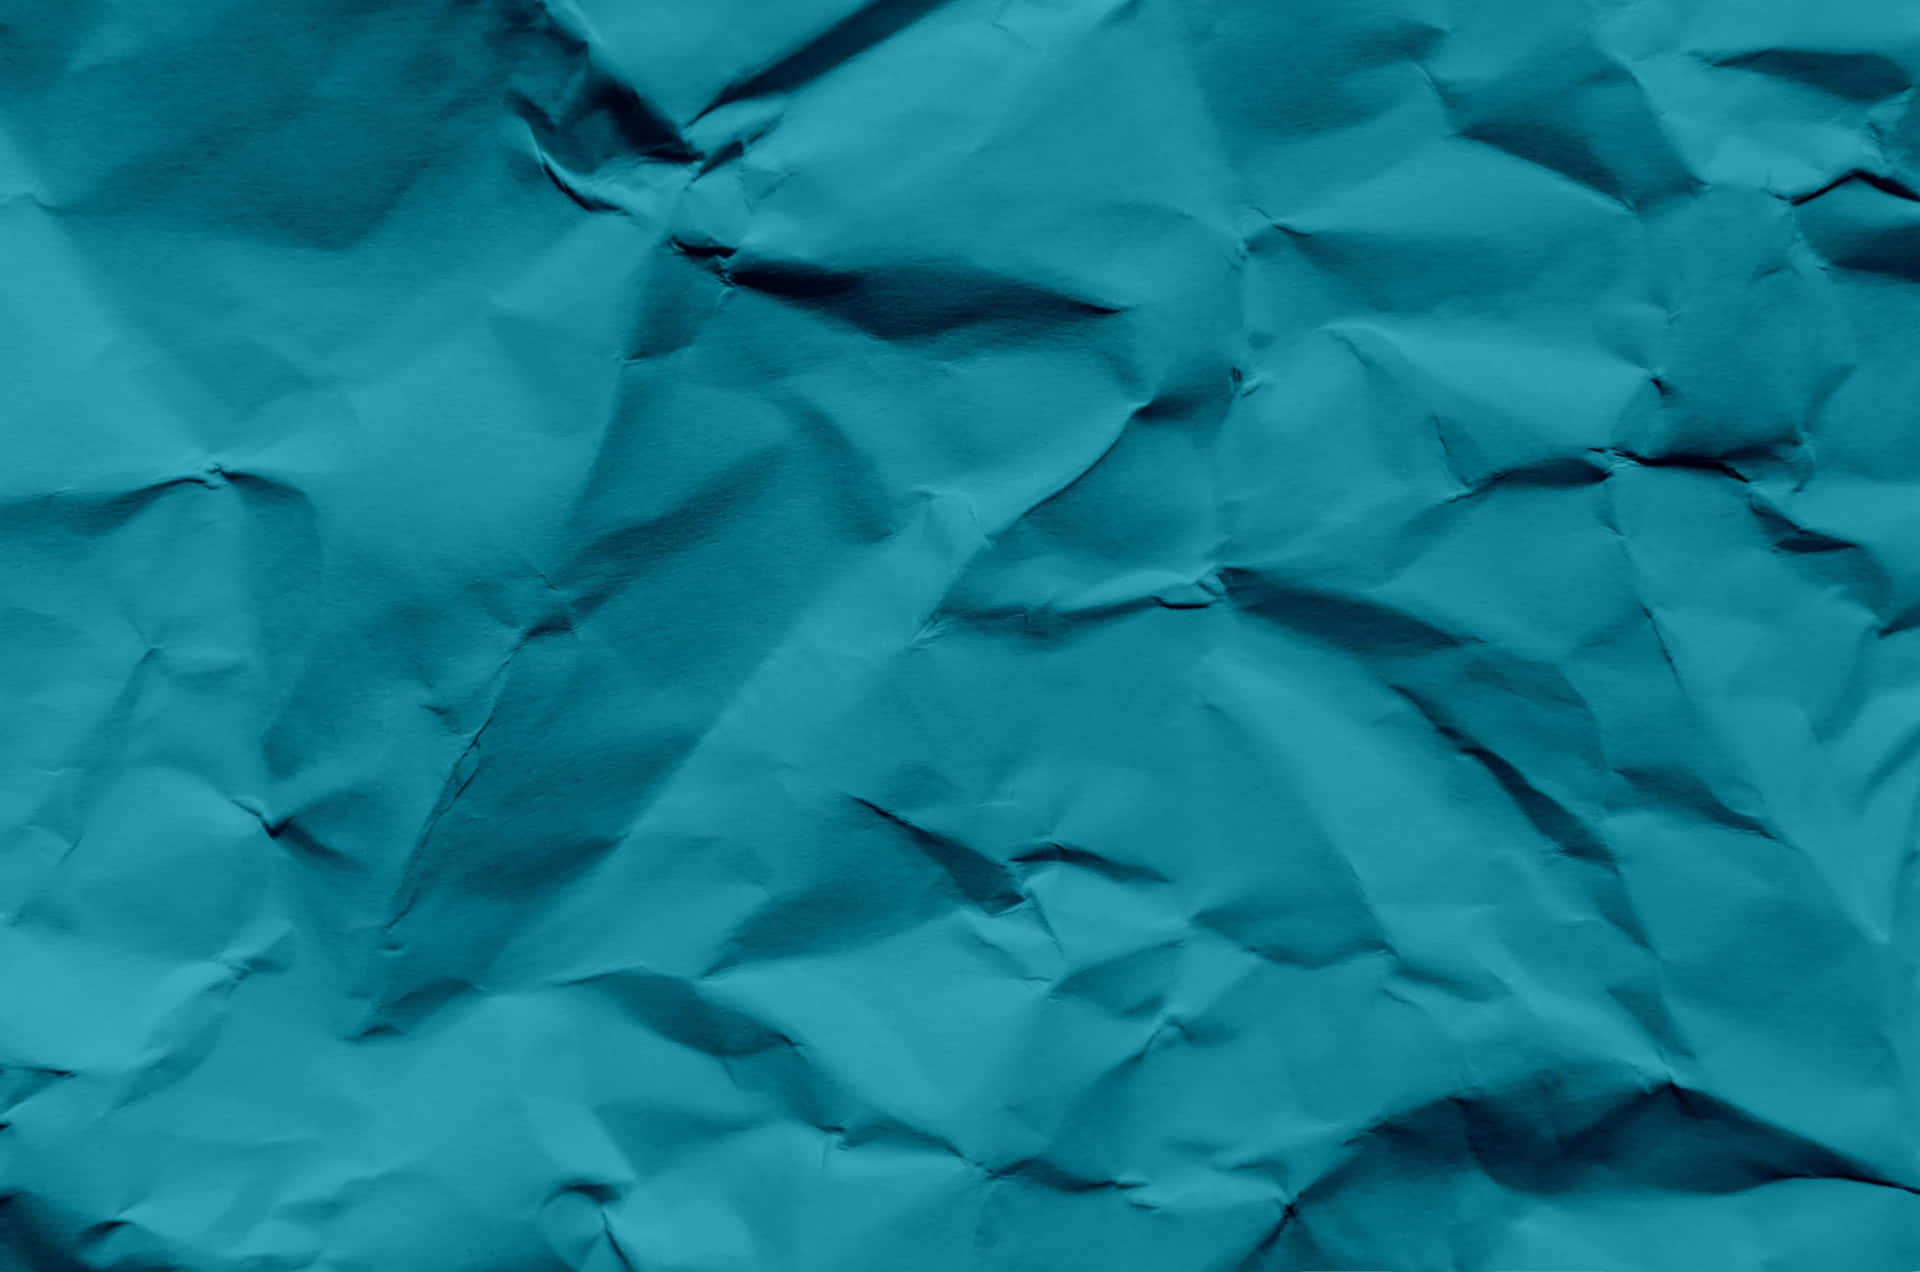 A Blue Crumpled Paper Background